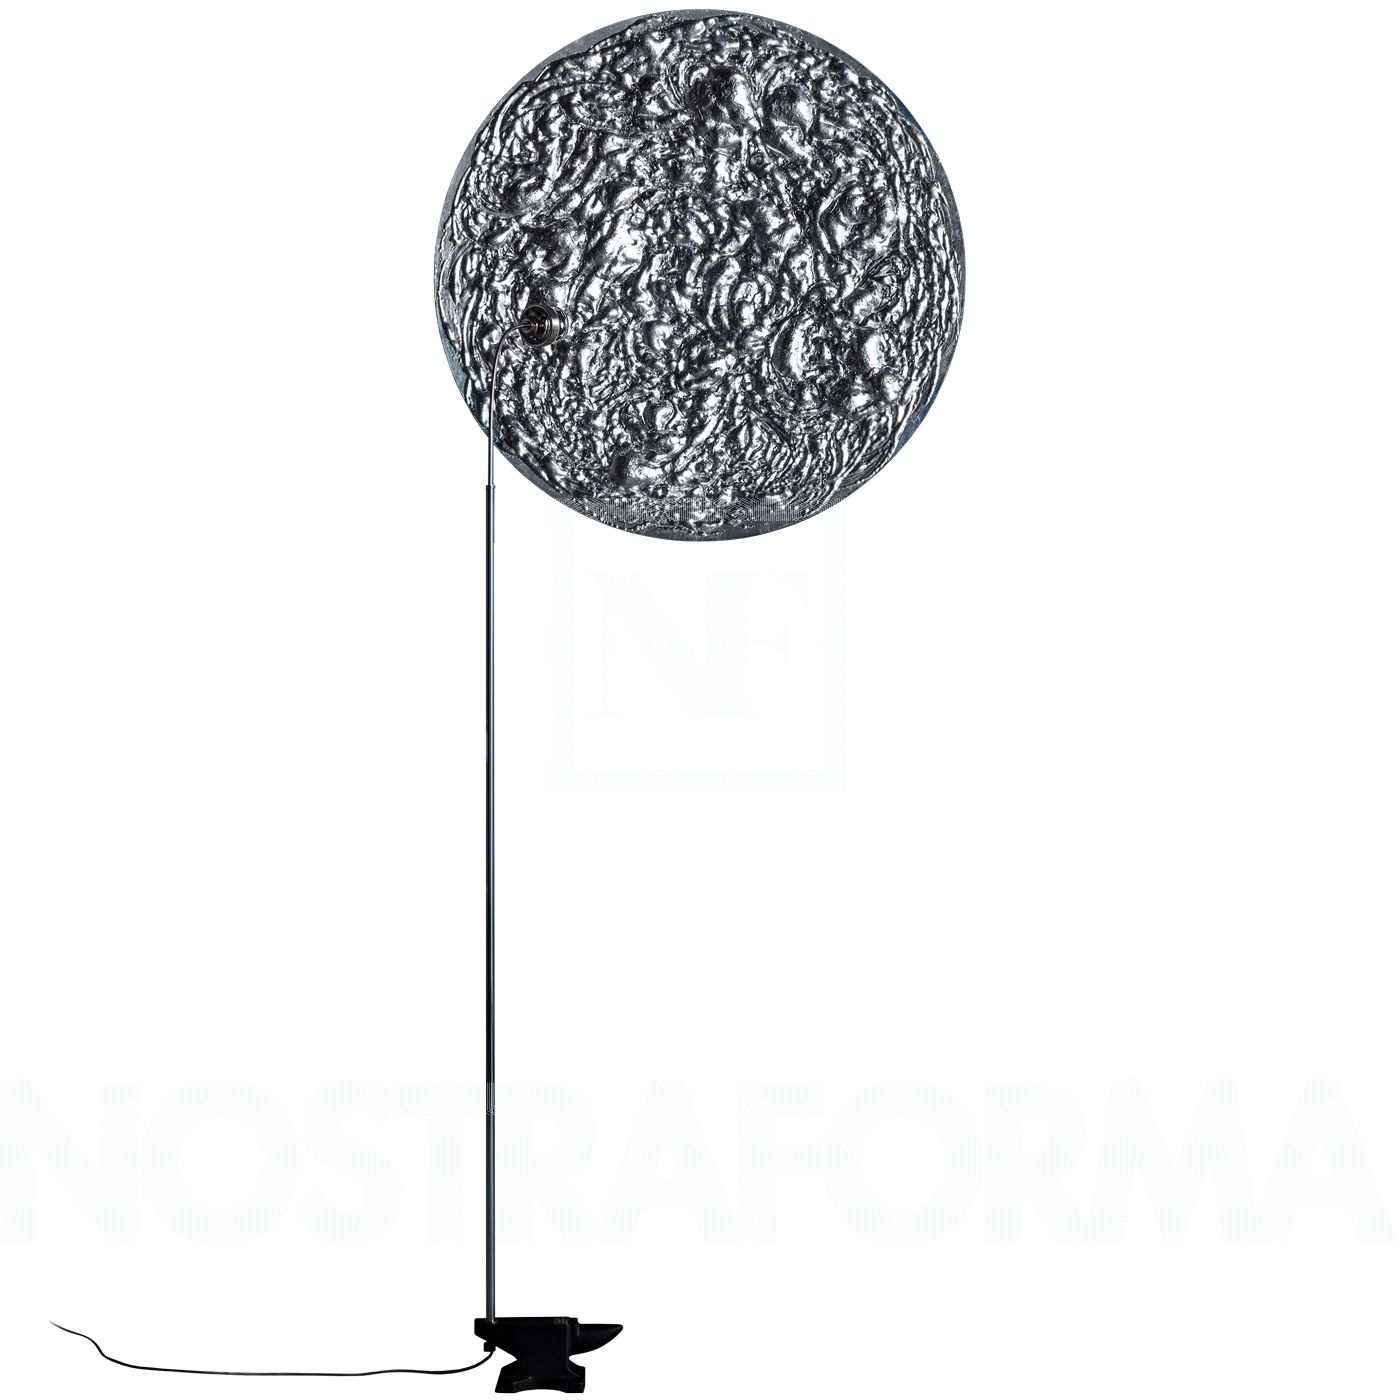 Catellani Smith Stchu Moon 08 Floor Lamp regarding dimensions 1400 X 1400